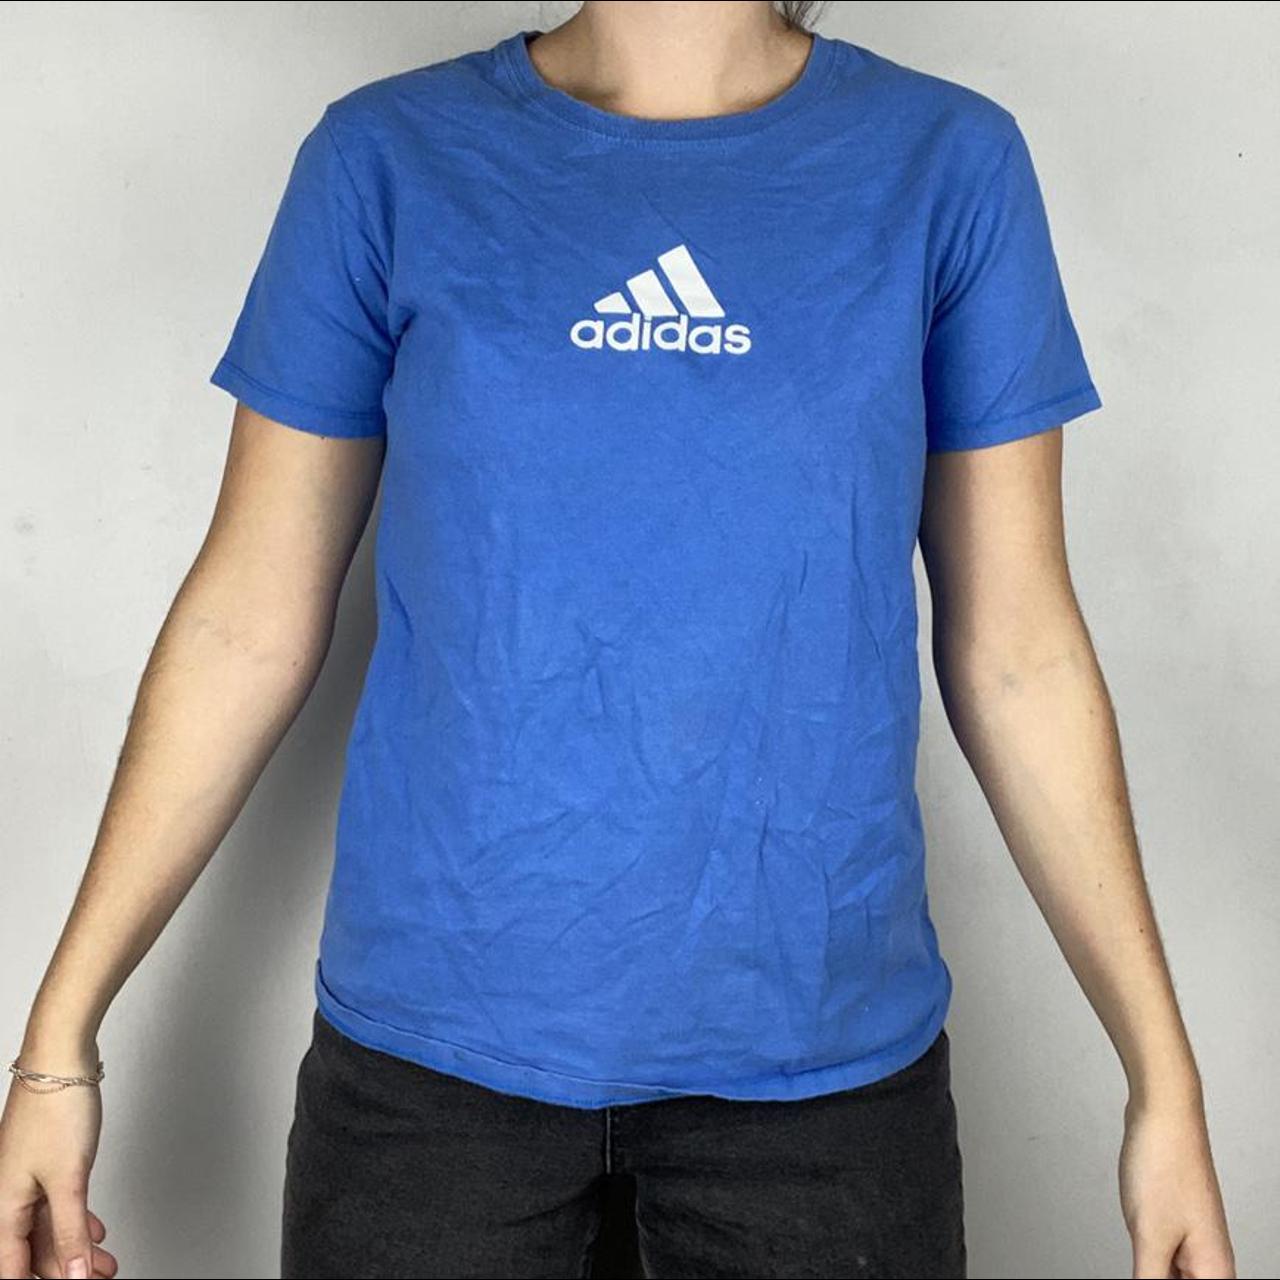 Product Image 2 - Adidas Tee💙
This adorable Adidas T-shirt